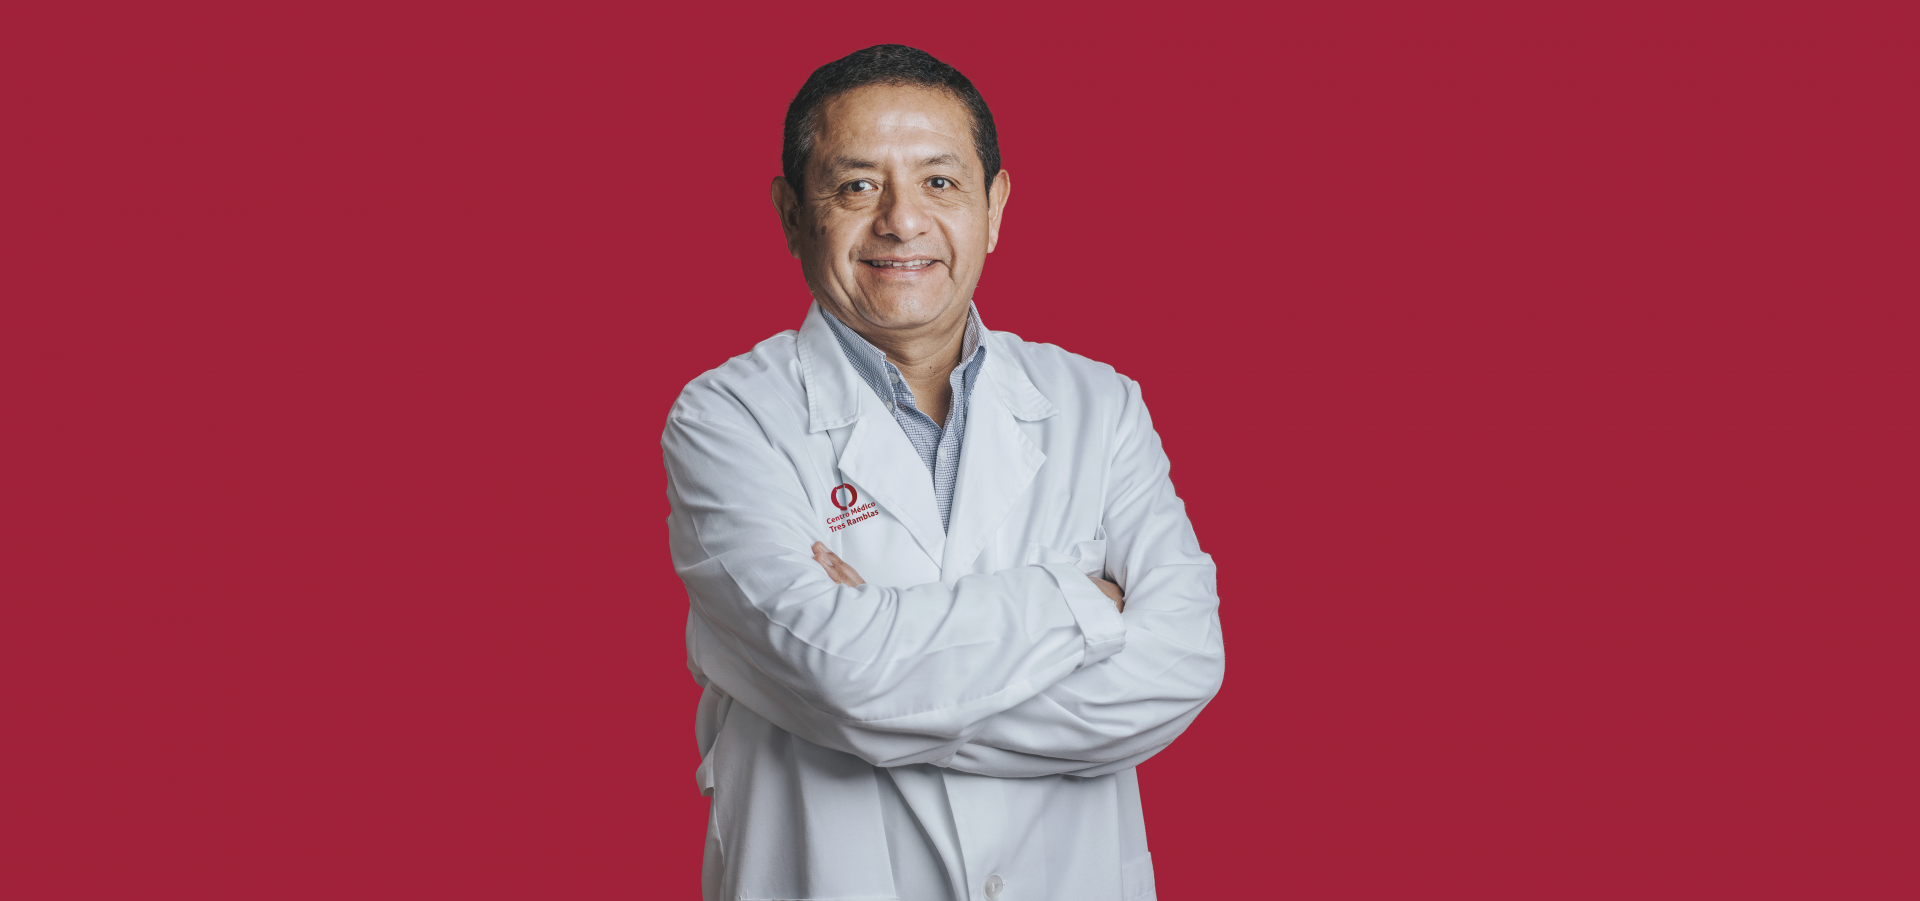 Dr. Valois Francisco Varillas Solano